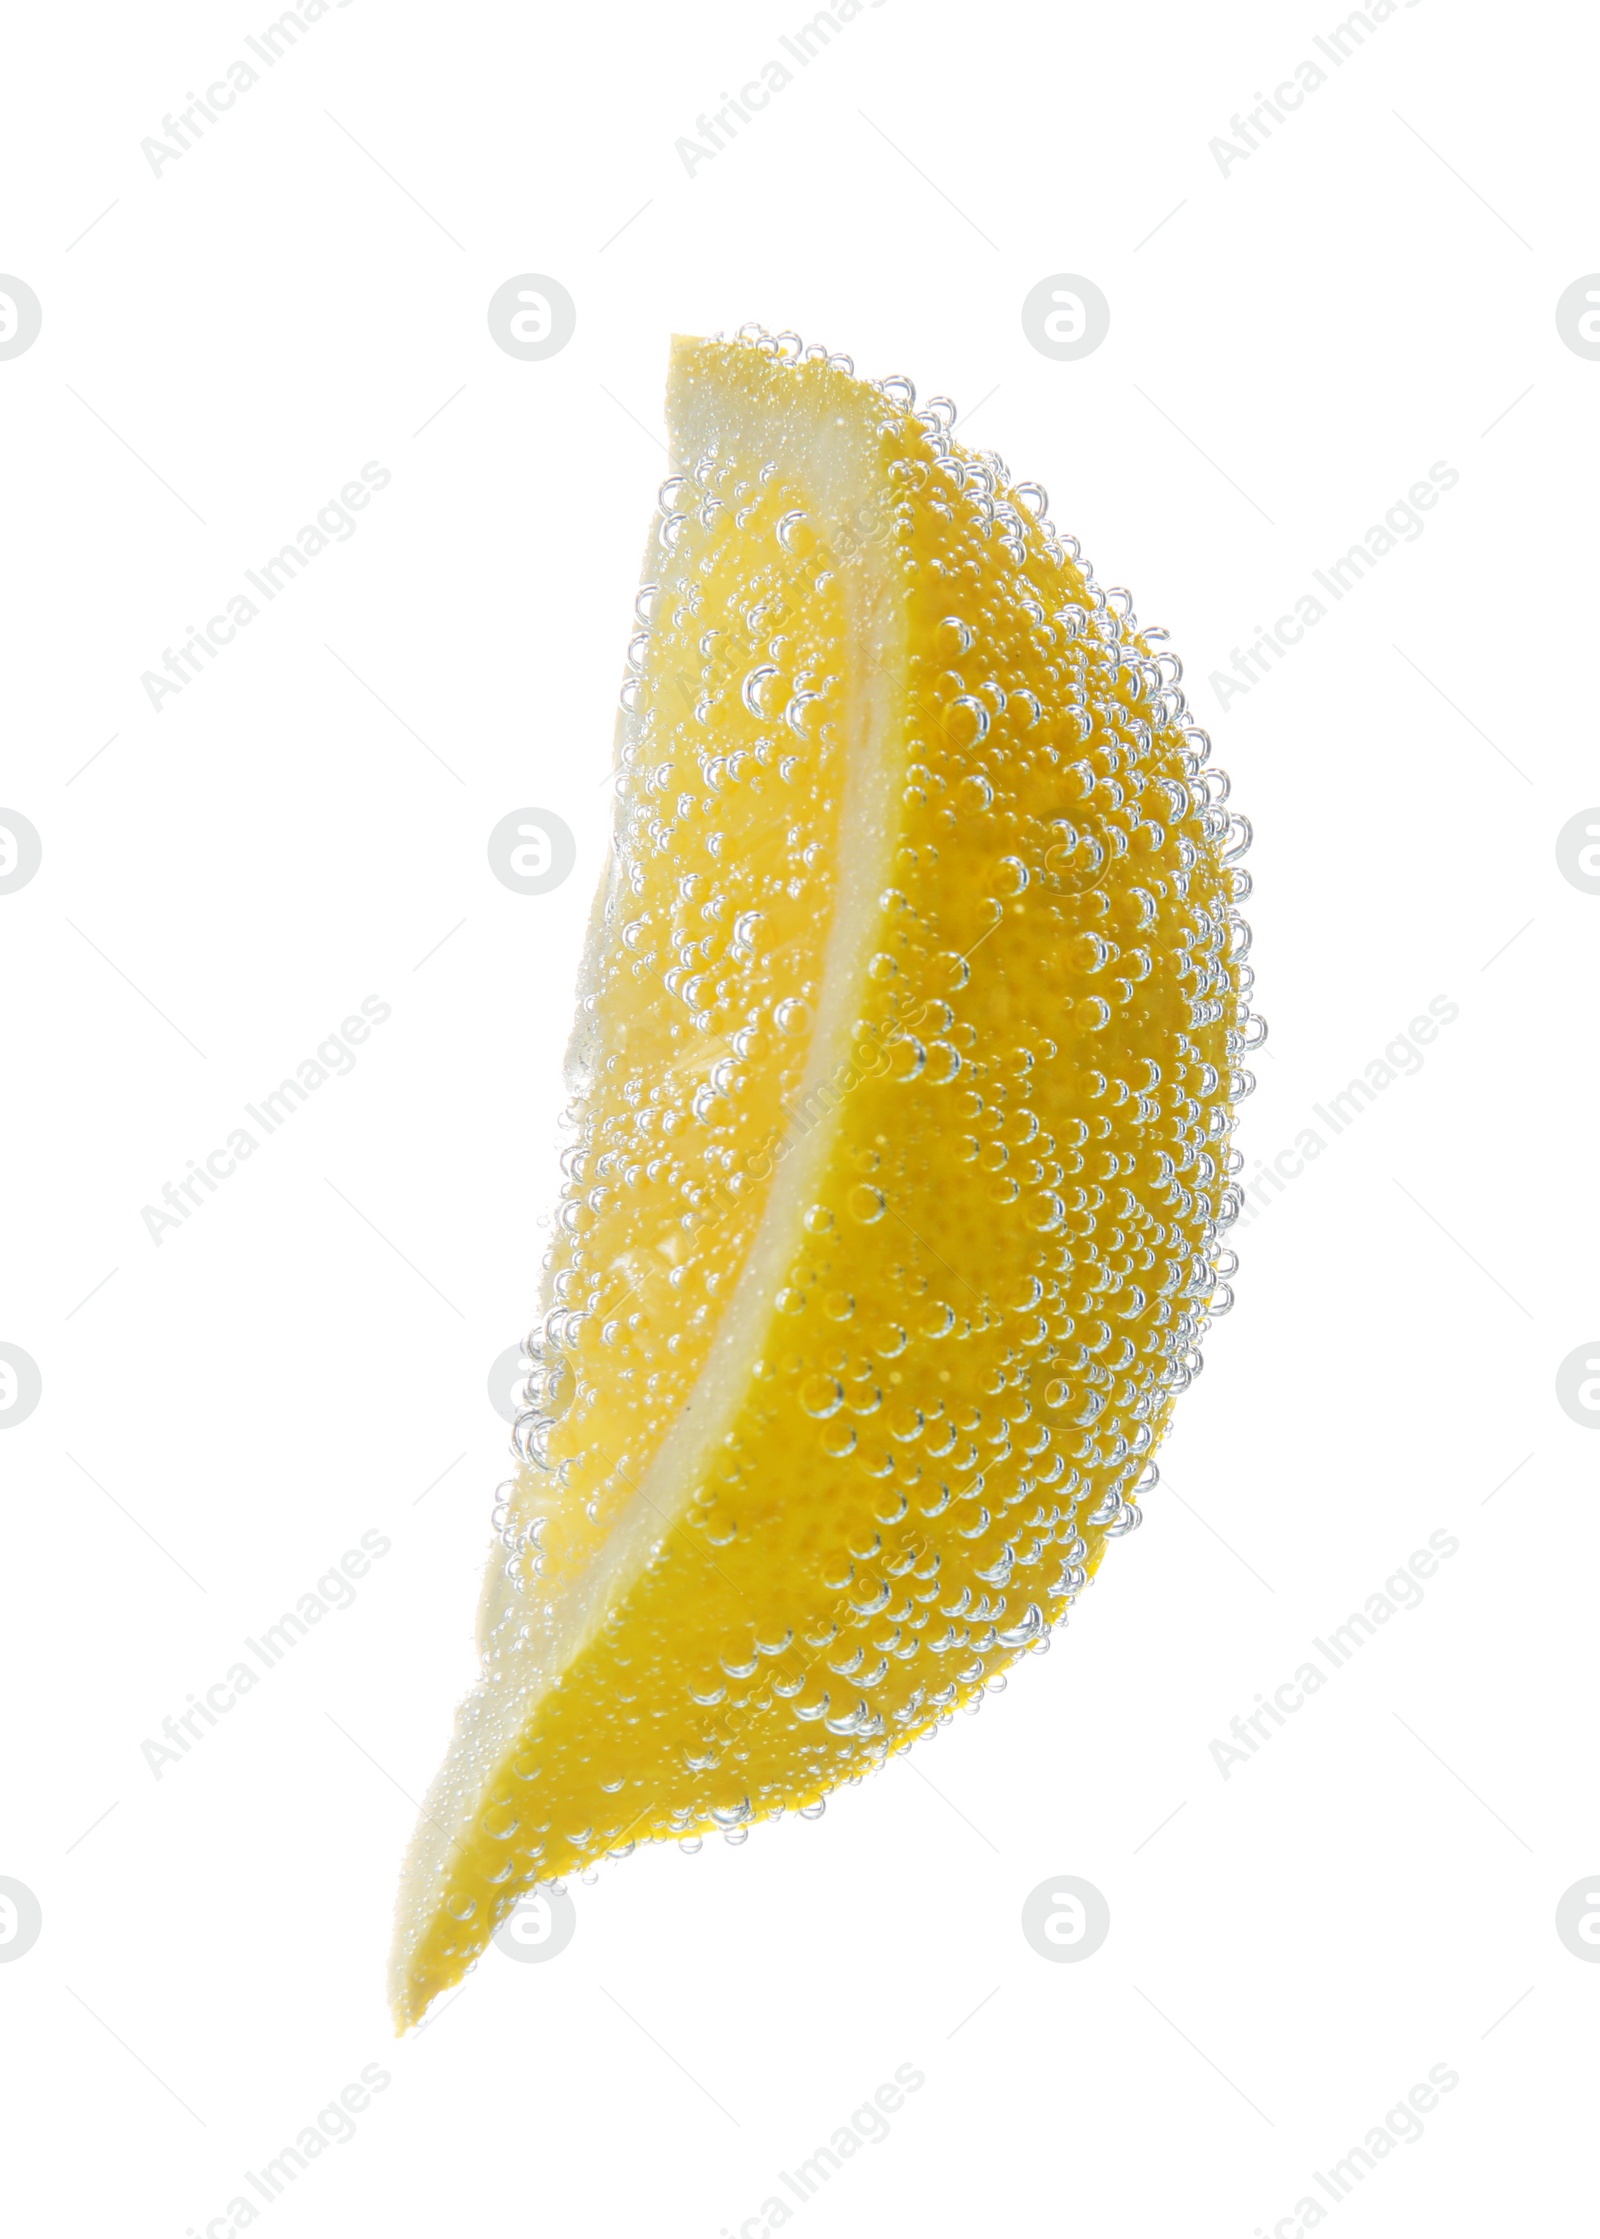 Photo of Slice of lemon in sparkling water on white background. Citrus soda